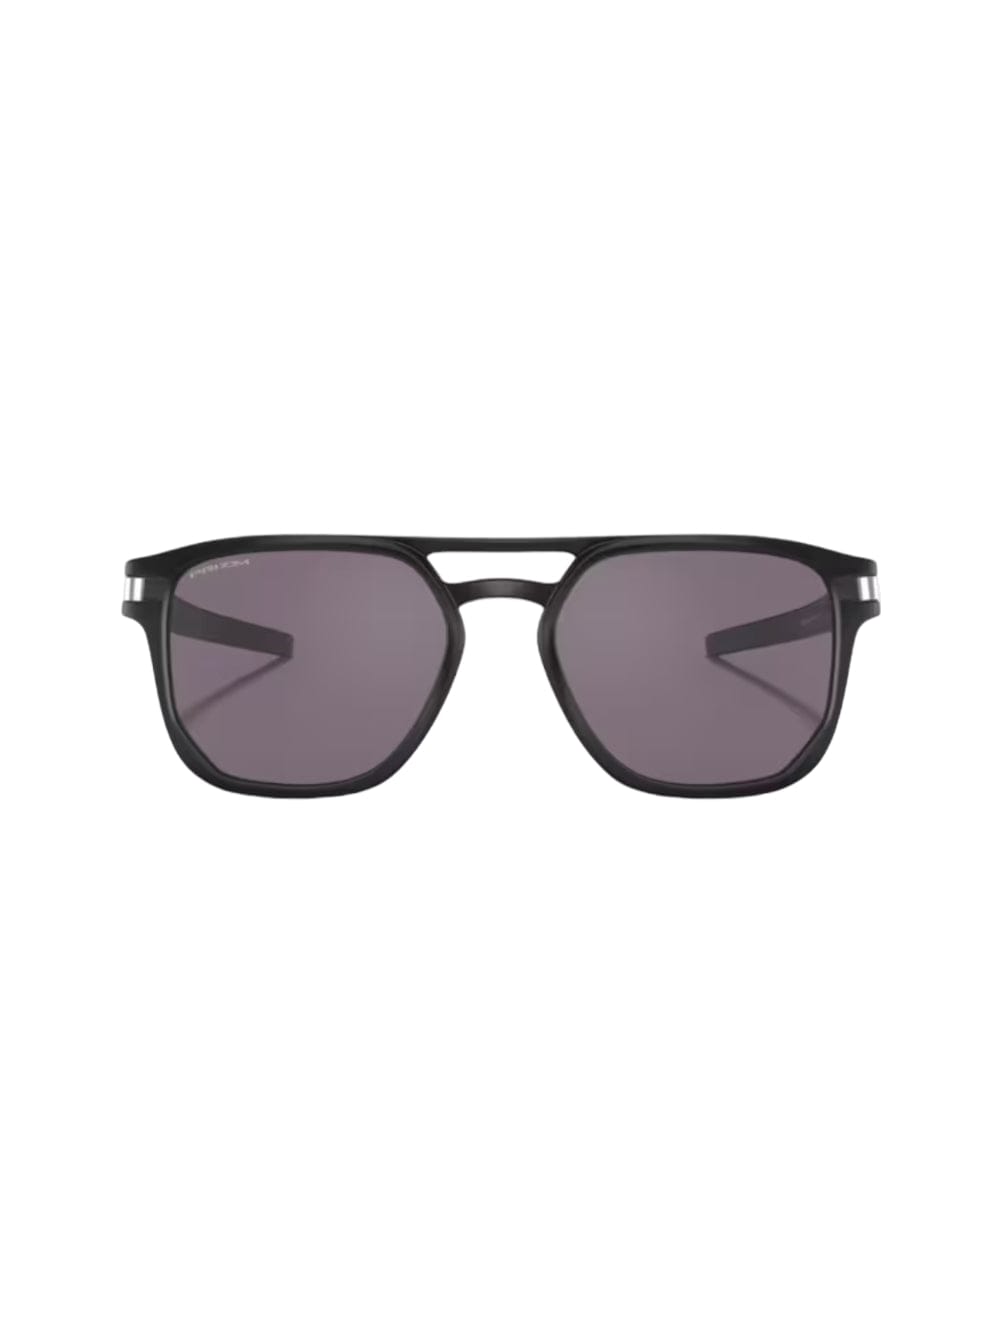 Latch Beta - 9436 Sunglasses